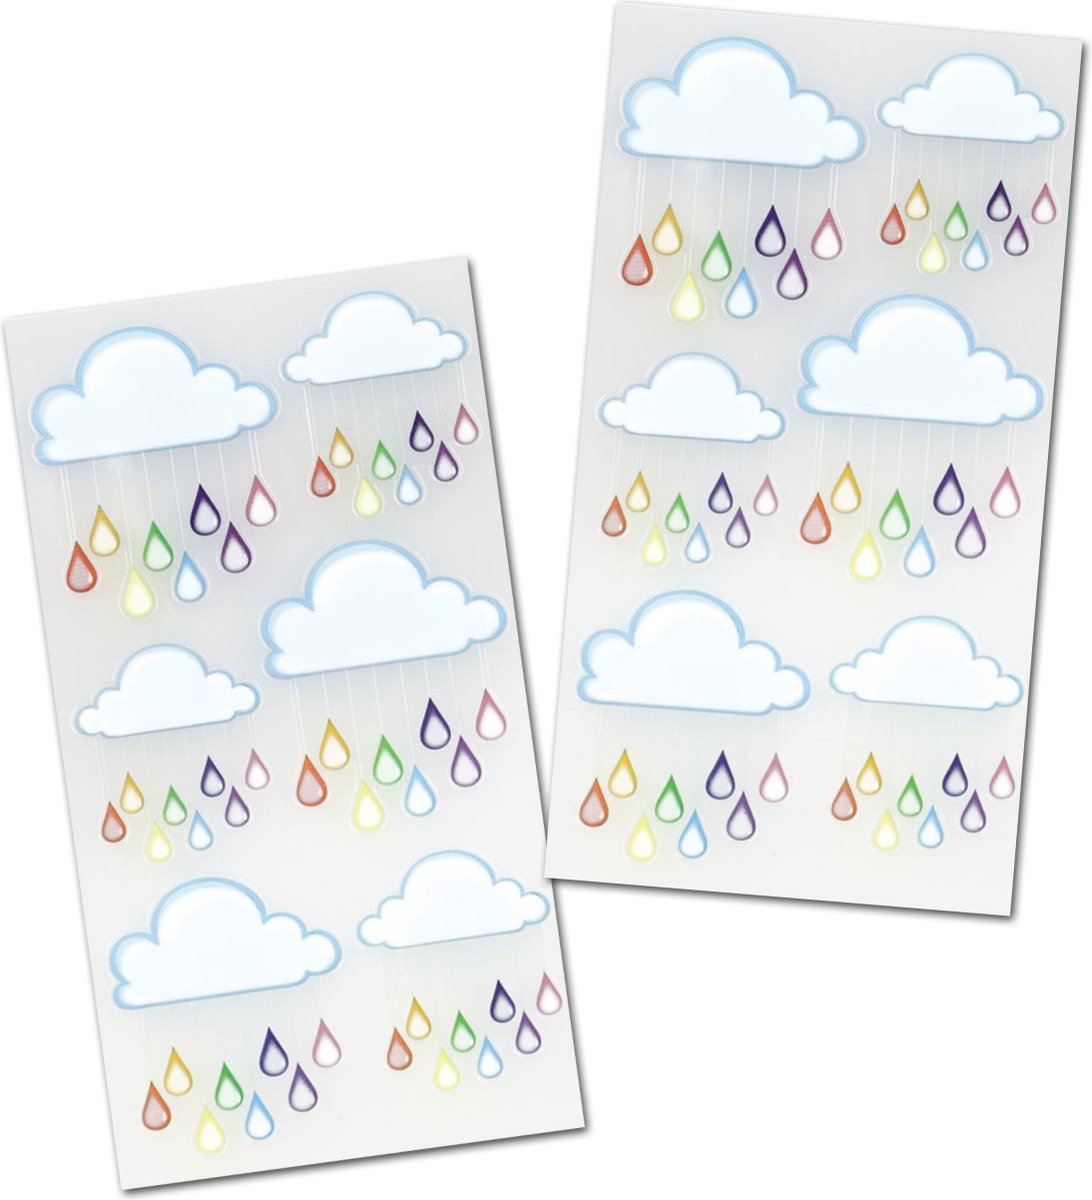 Stickervellen Wolken en Druppels - Vellum Stickers - Stickervellen - Knutselen Meisjes - Knutselen Kind - Stickers Volwassenen - Stickervellen Volwassenen - Kaarten Maken - Stickers Kind - Beterschapskaart Maken